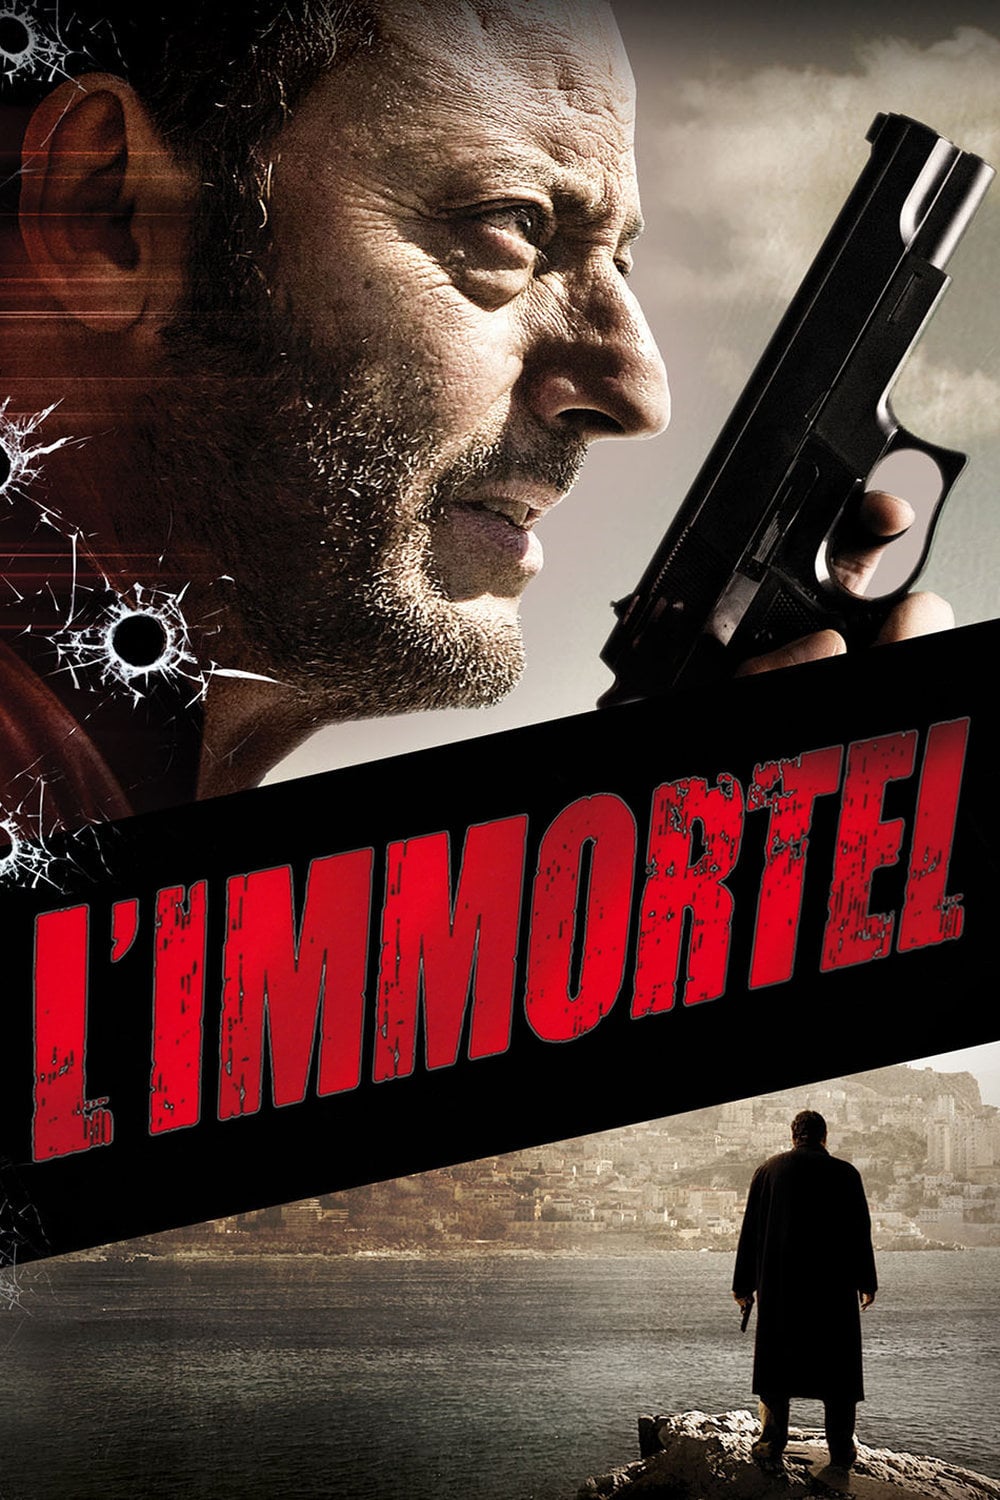 Affiche du film "L'Immortel"